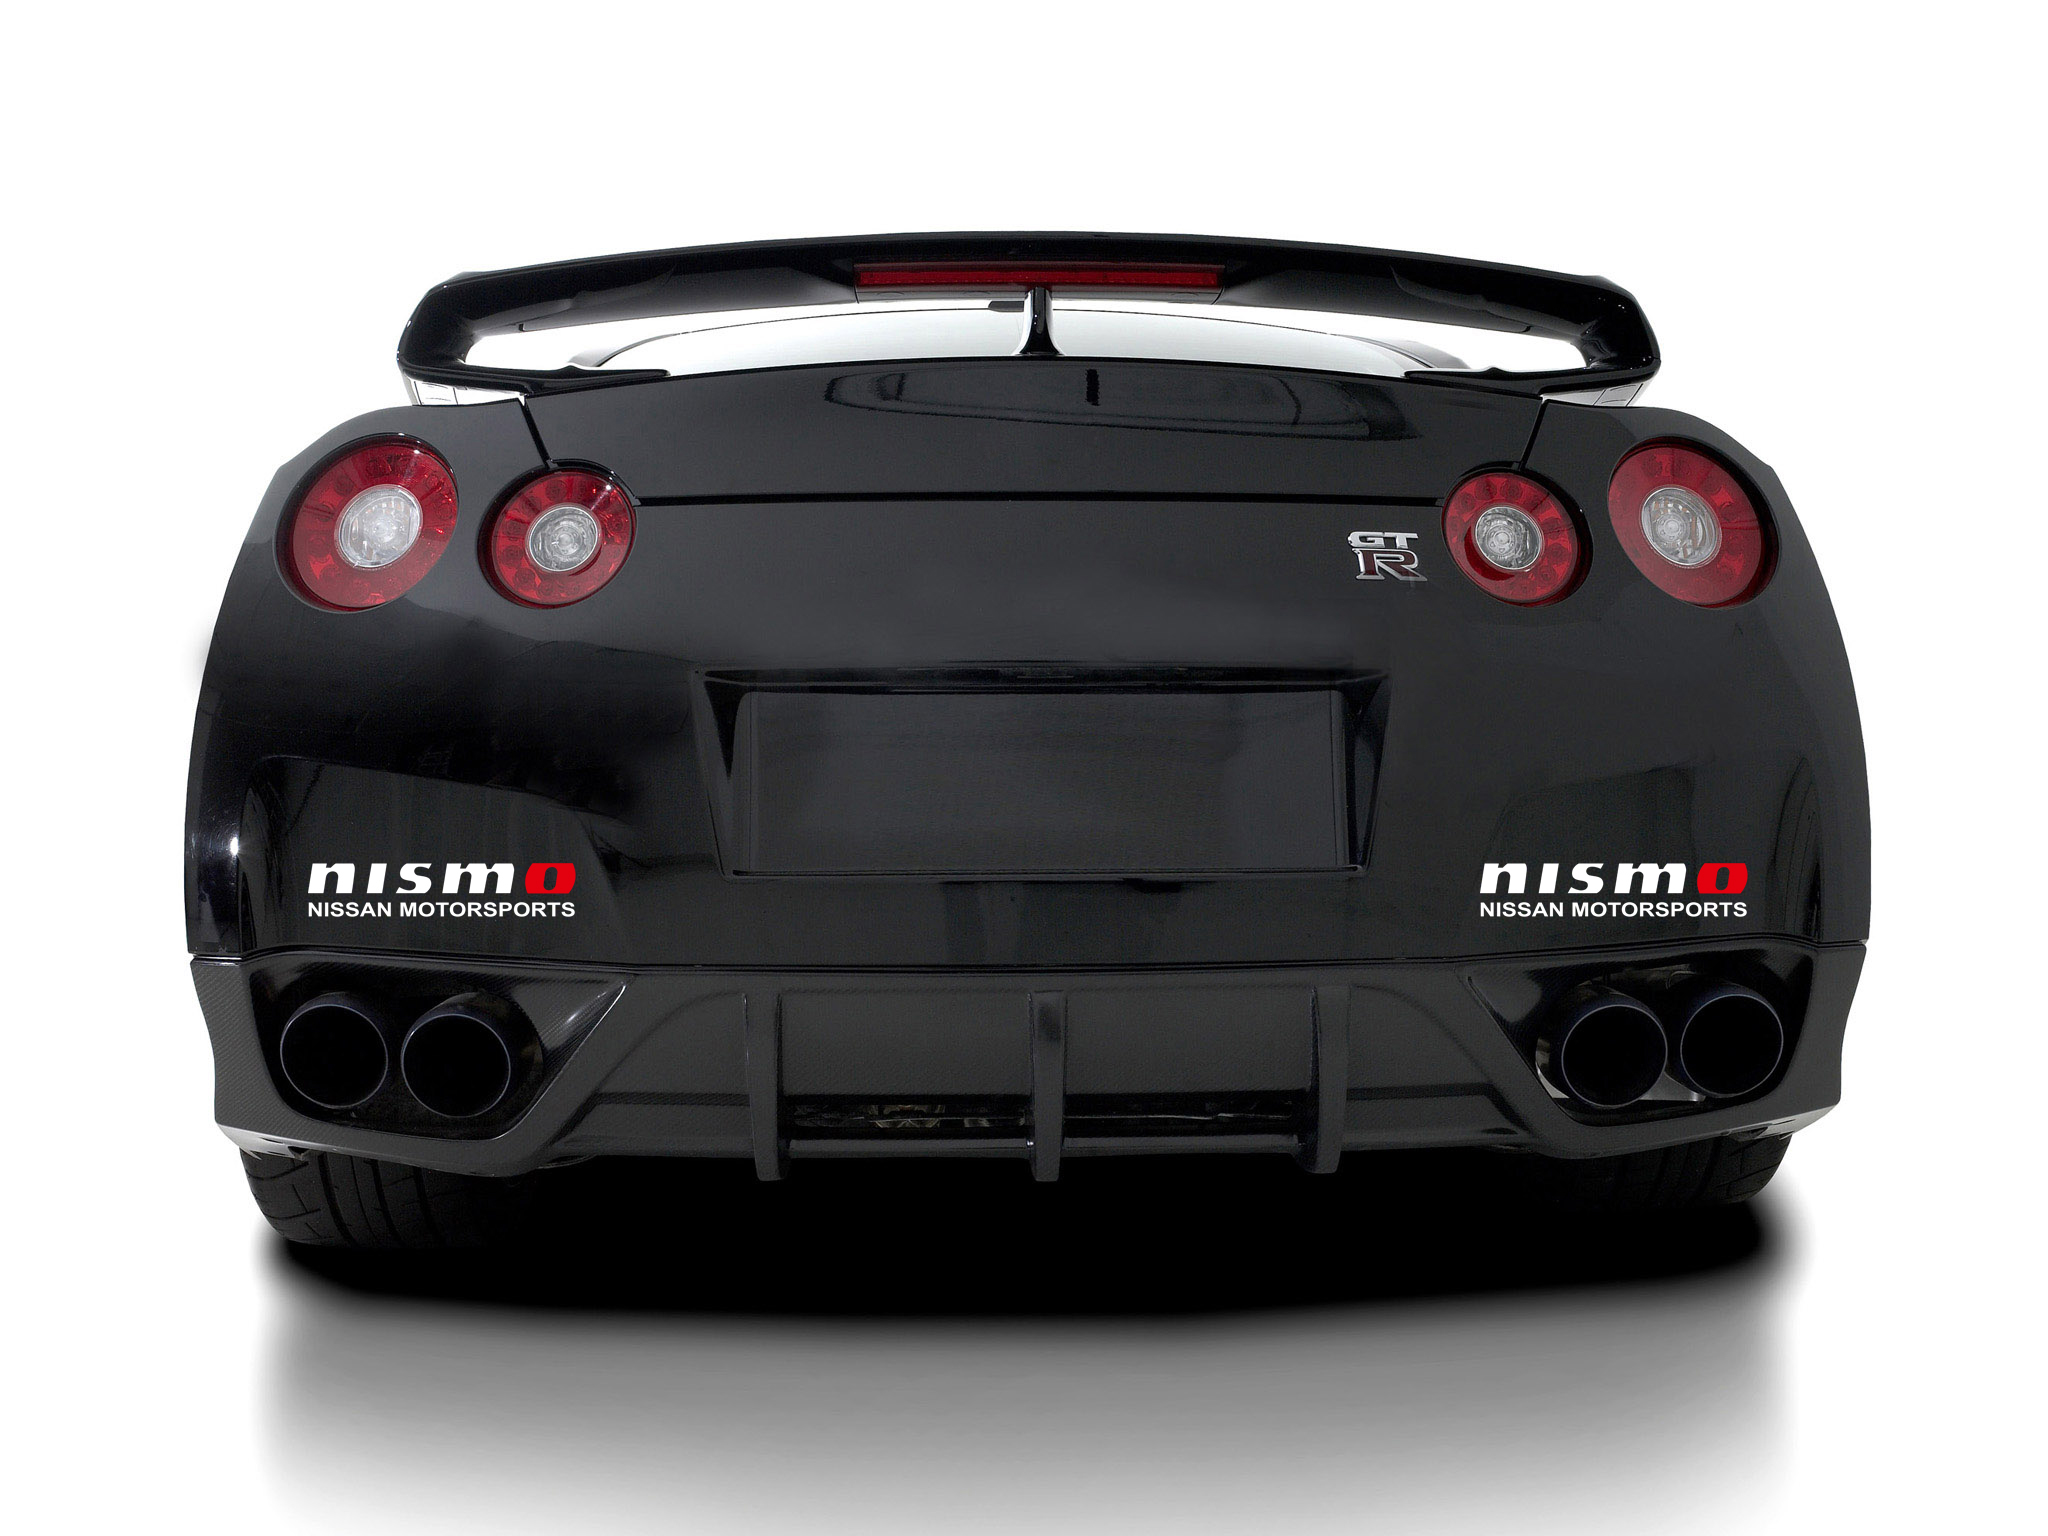 2x NISMO Nissan Motorsports Racing Vinyl Sticker Sticker past op GTR Altima 350Z 370Z